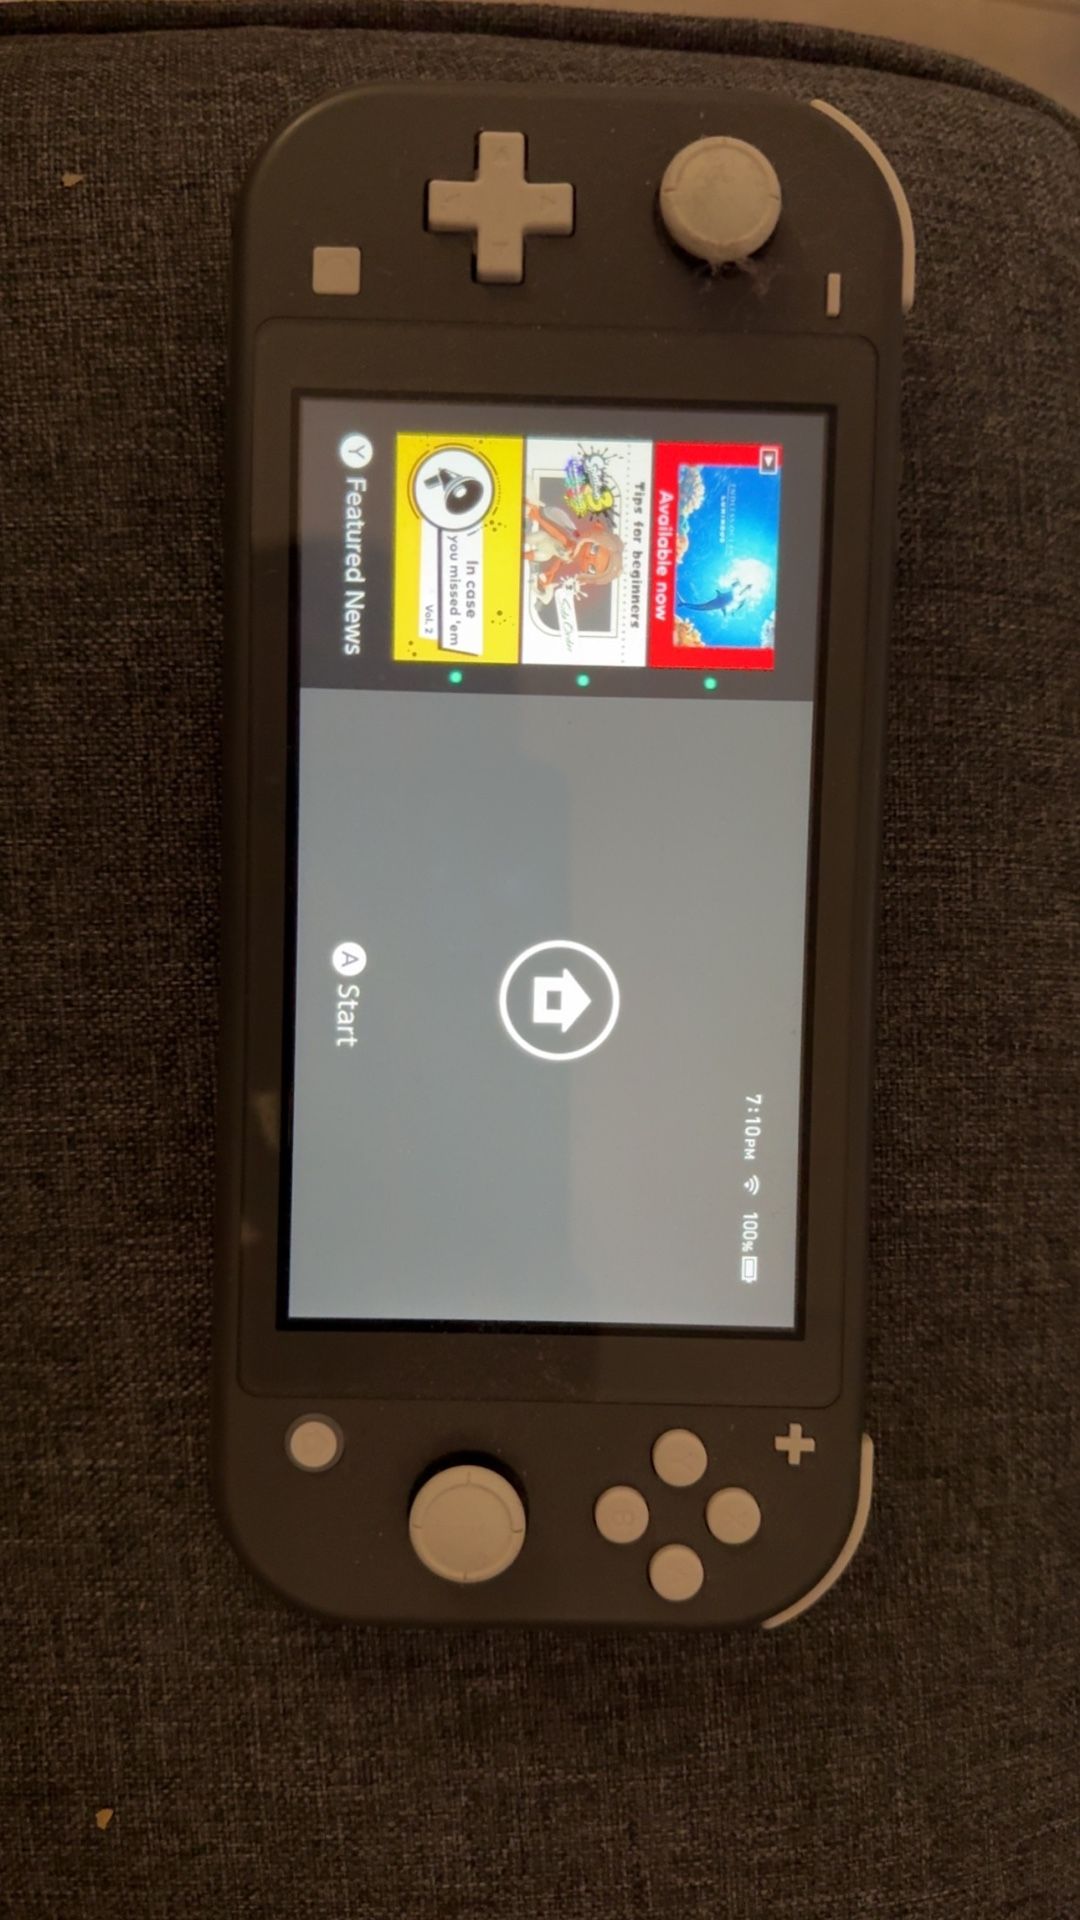 Grey Nintendo Switch Lite